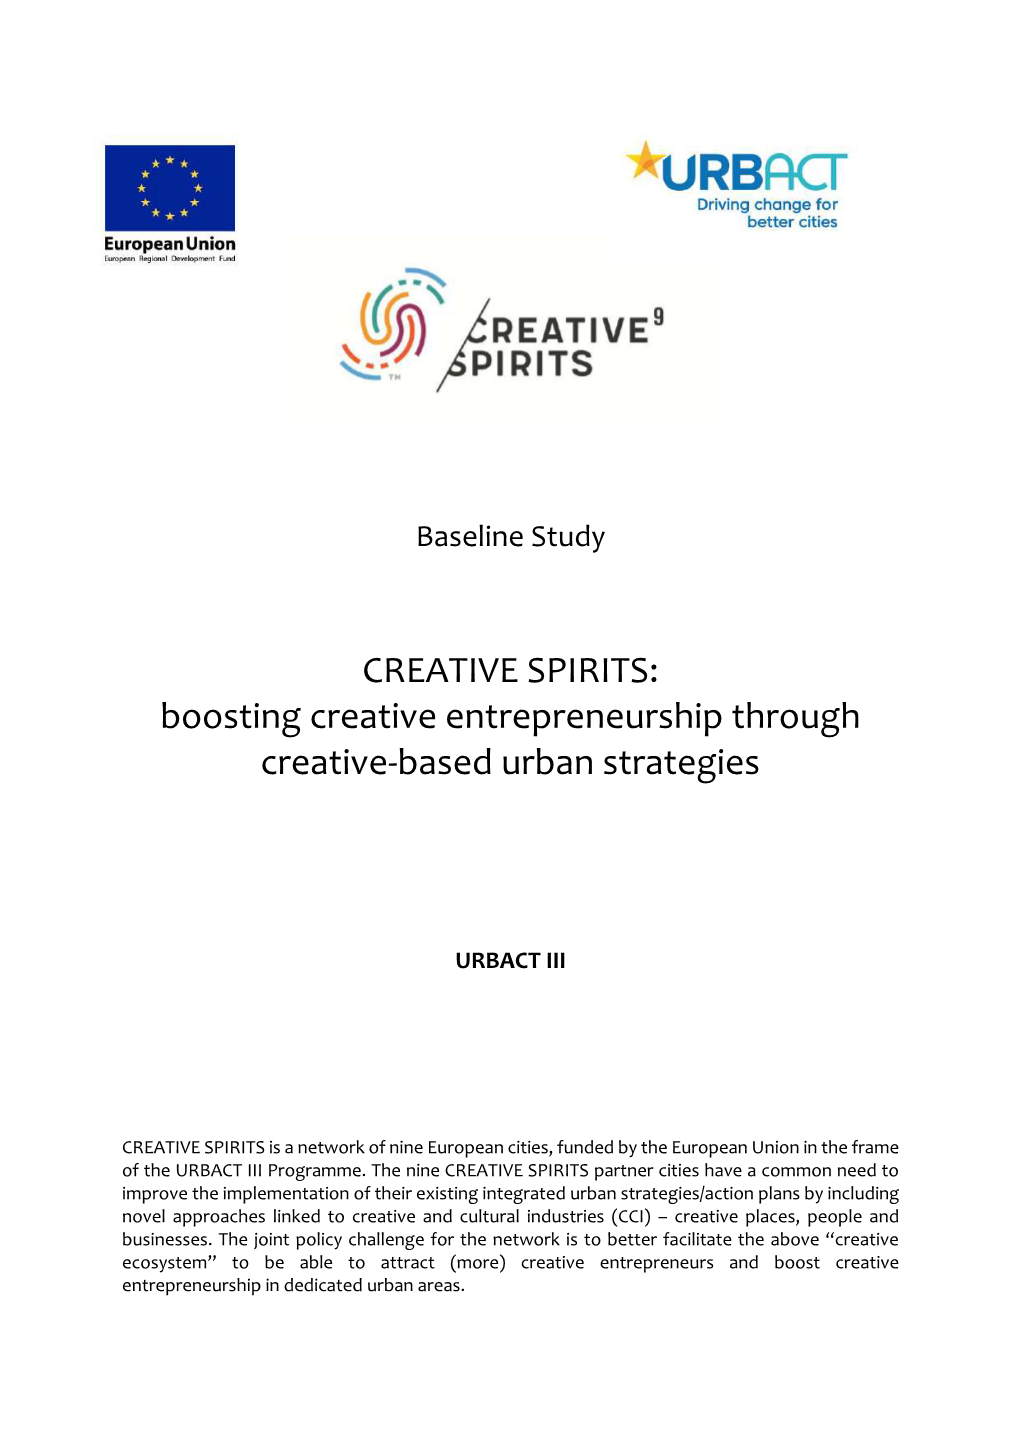 CREATIVE SPIRITS: Boosting Creative Entrepreneurship Through Creative-Based Urban Strategies